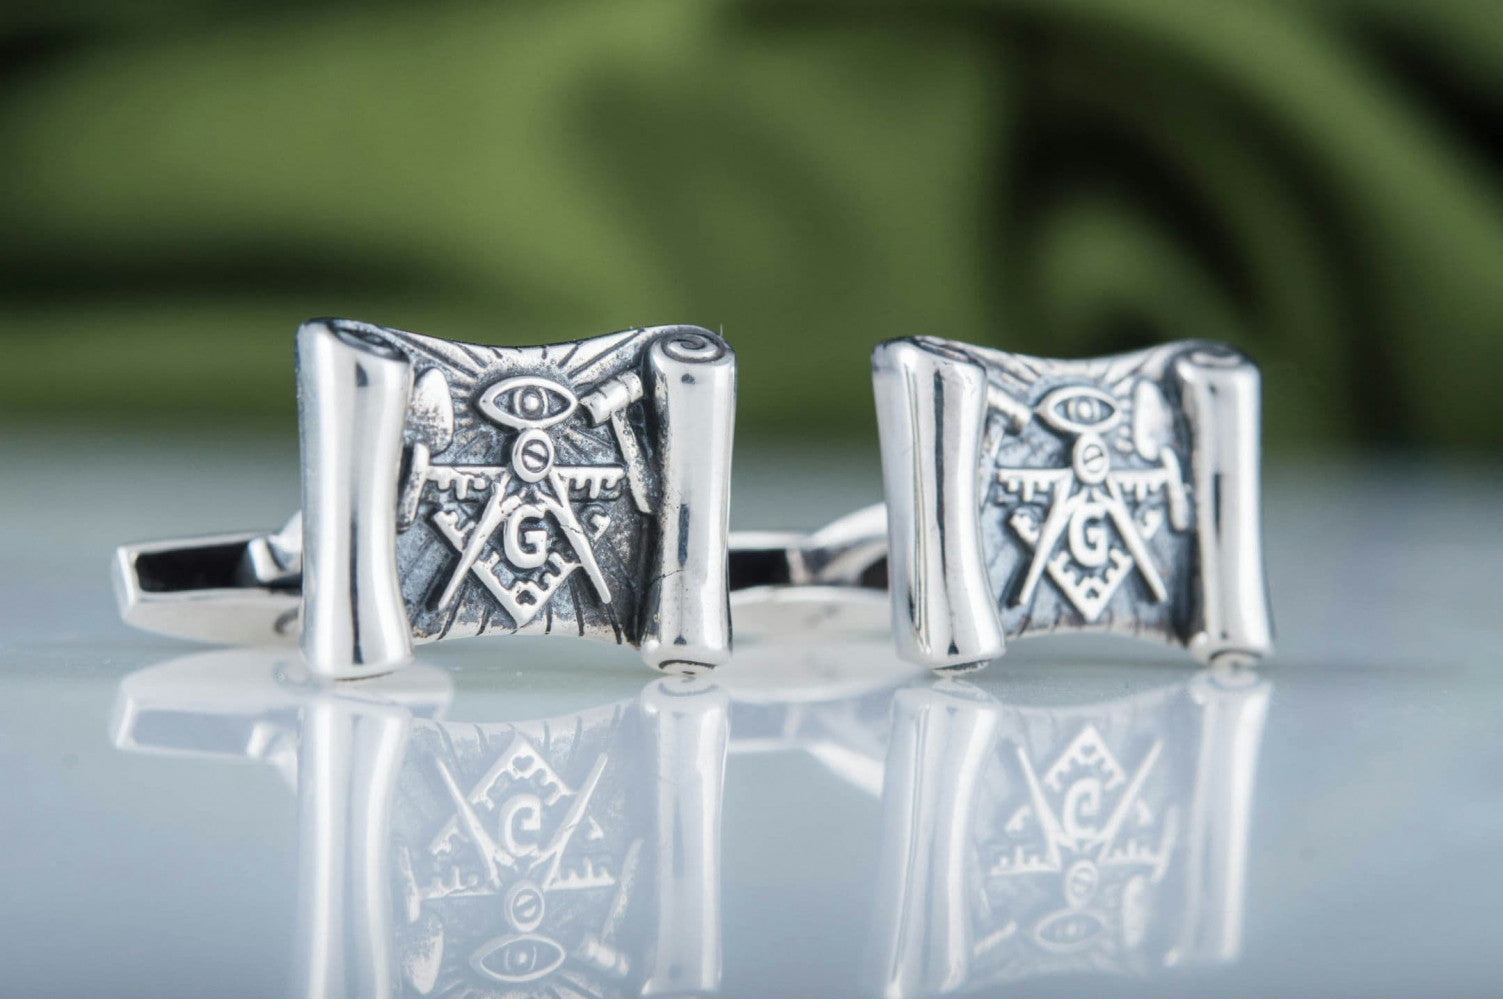 Cufflinks with Masonic Symbols Sterling Silver Handmade Jewelry